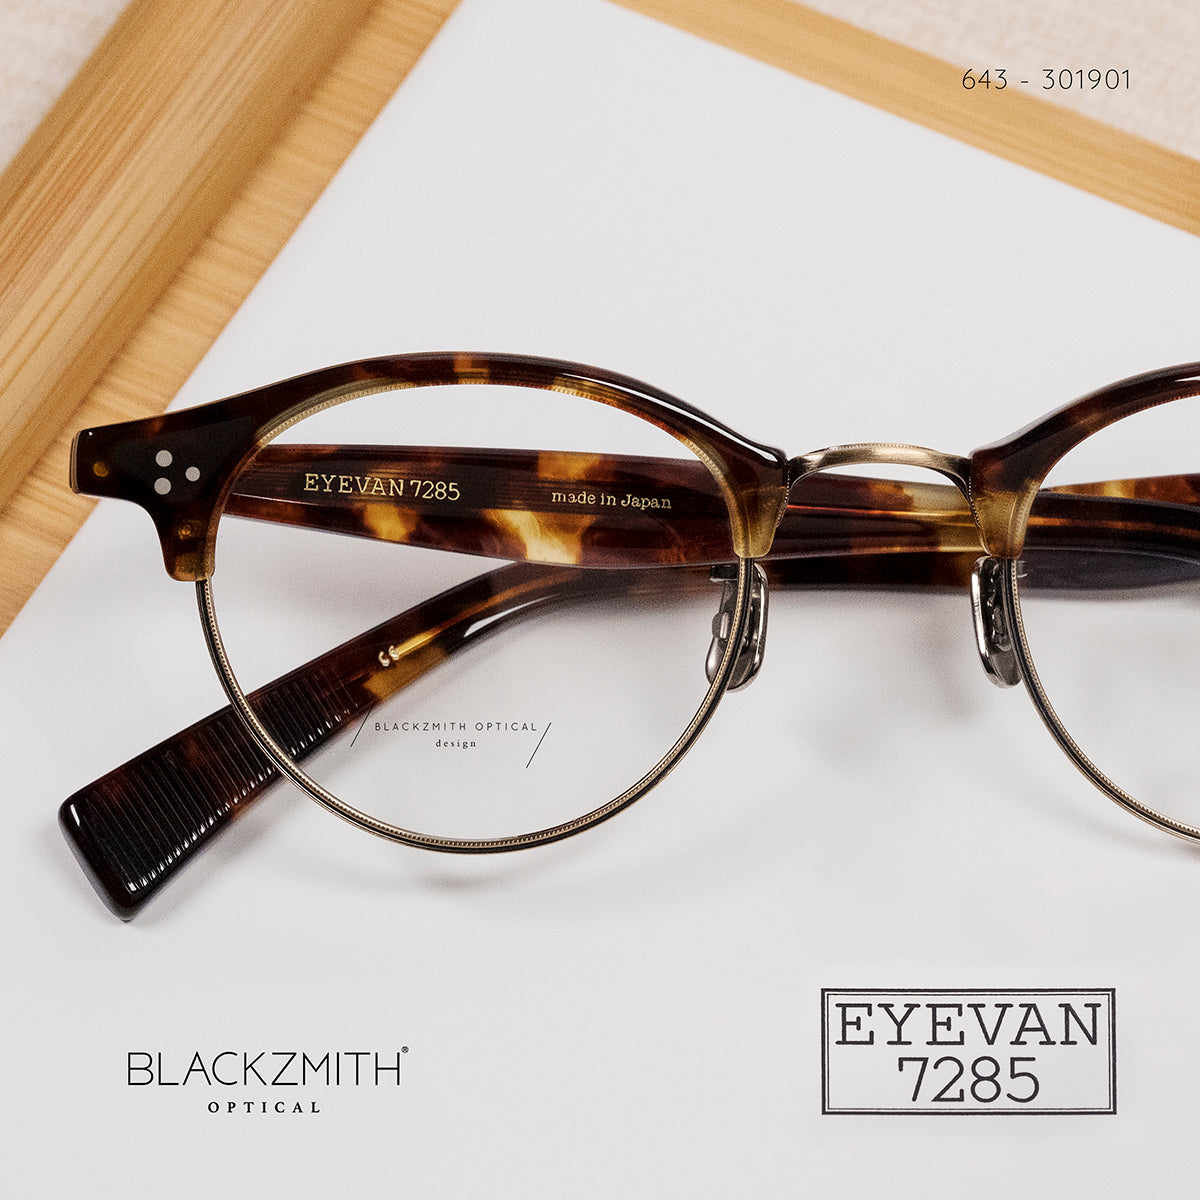 eyevan 7285 / 643 - サングラス/メガネ